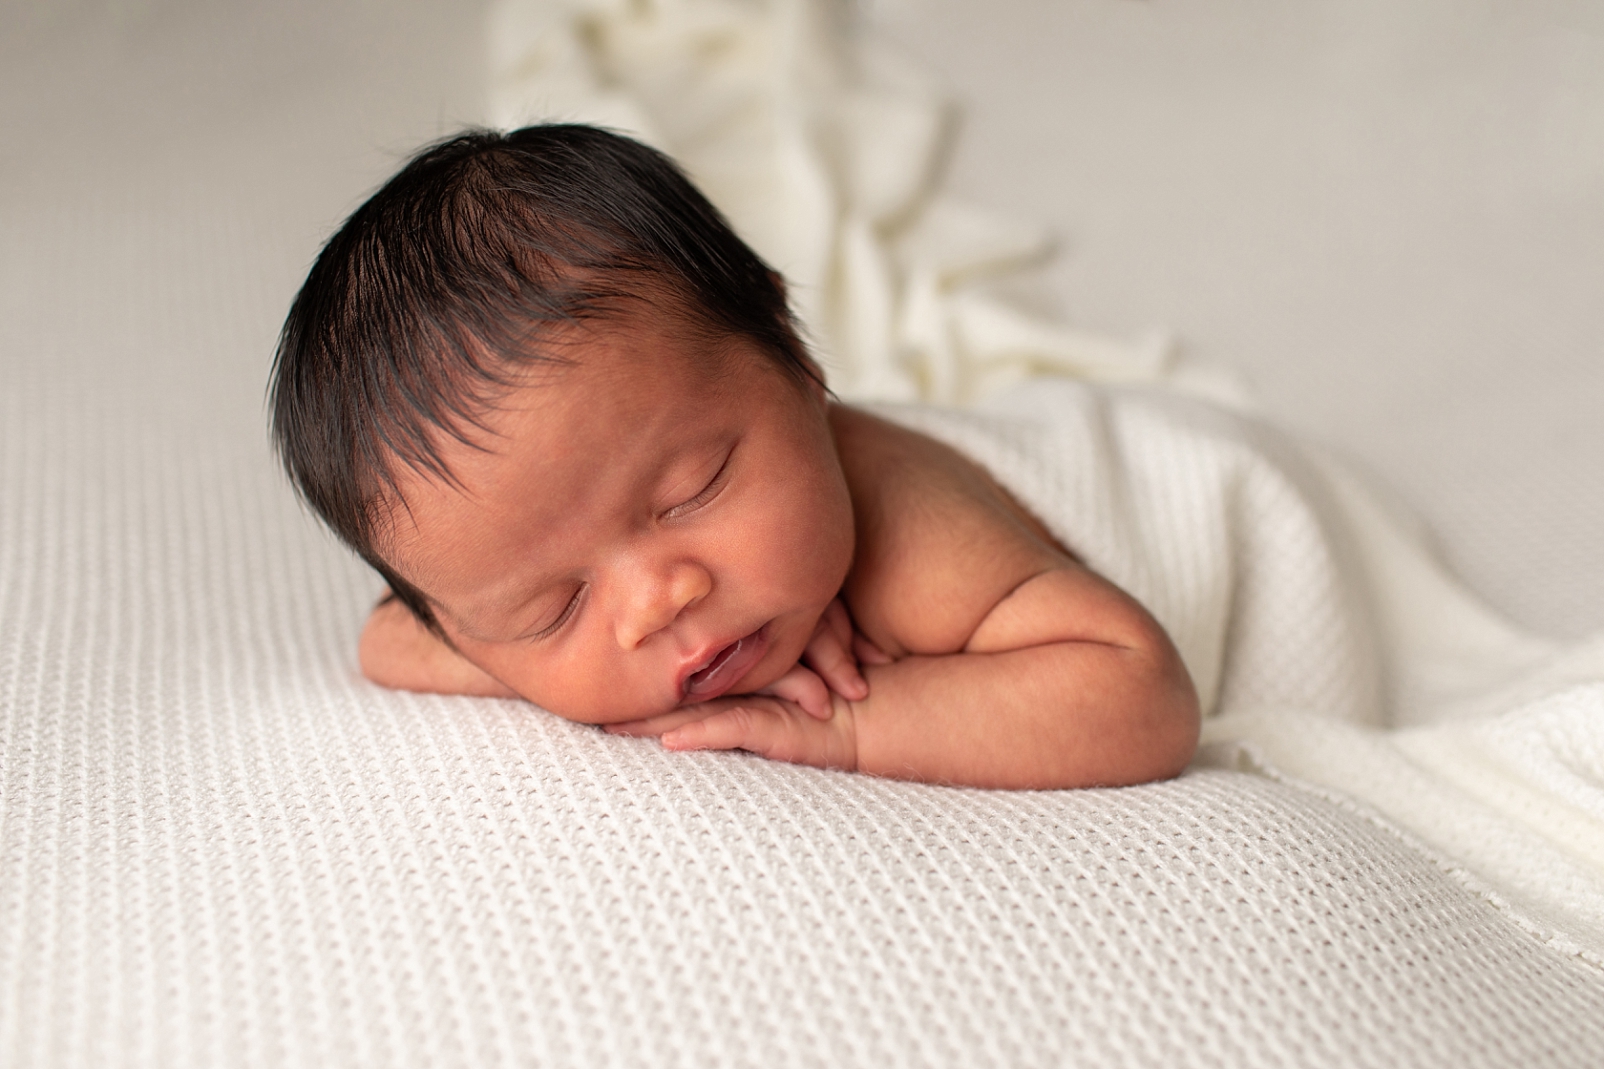 Newborn boy in tummy lying pose on a textured white fabric